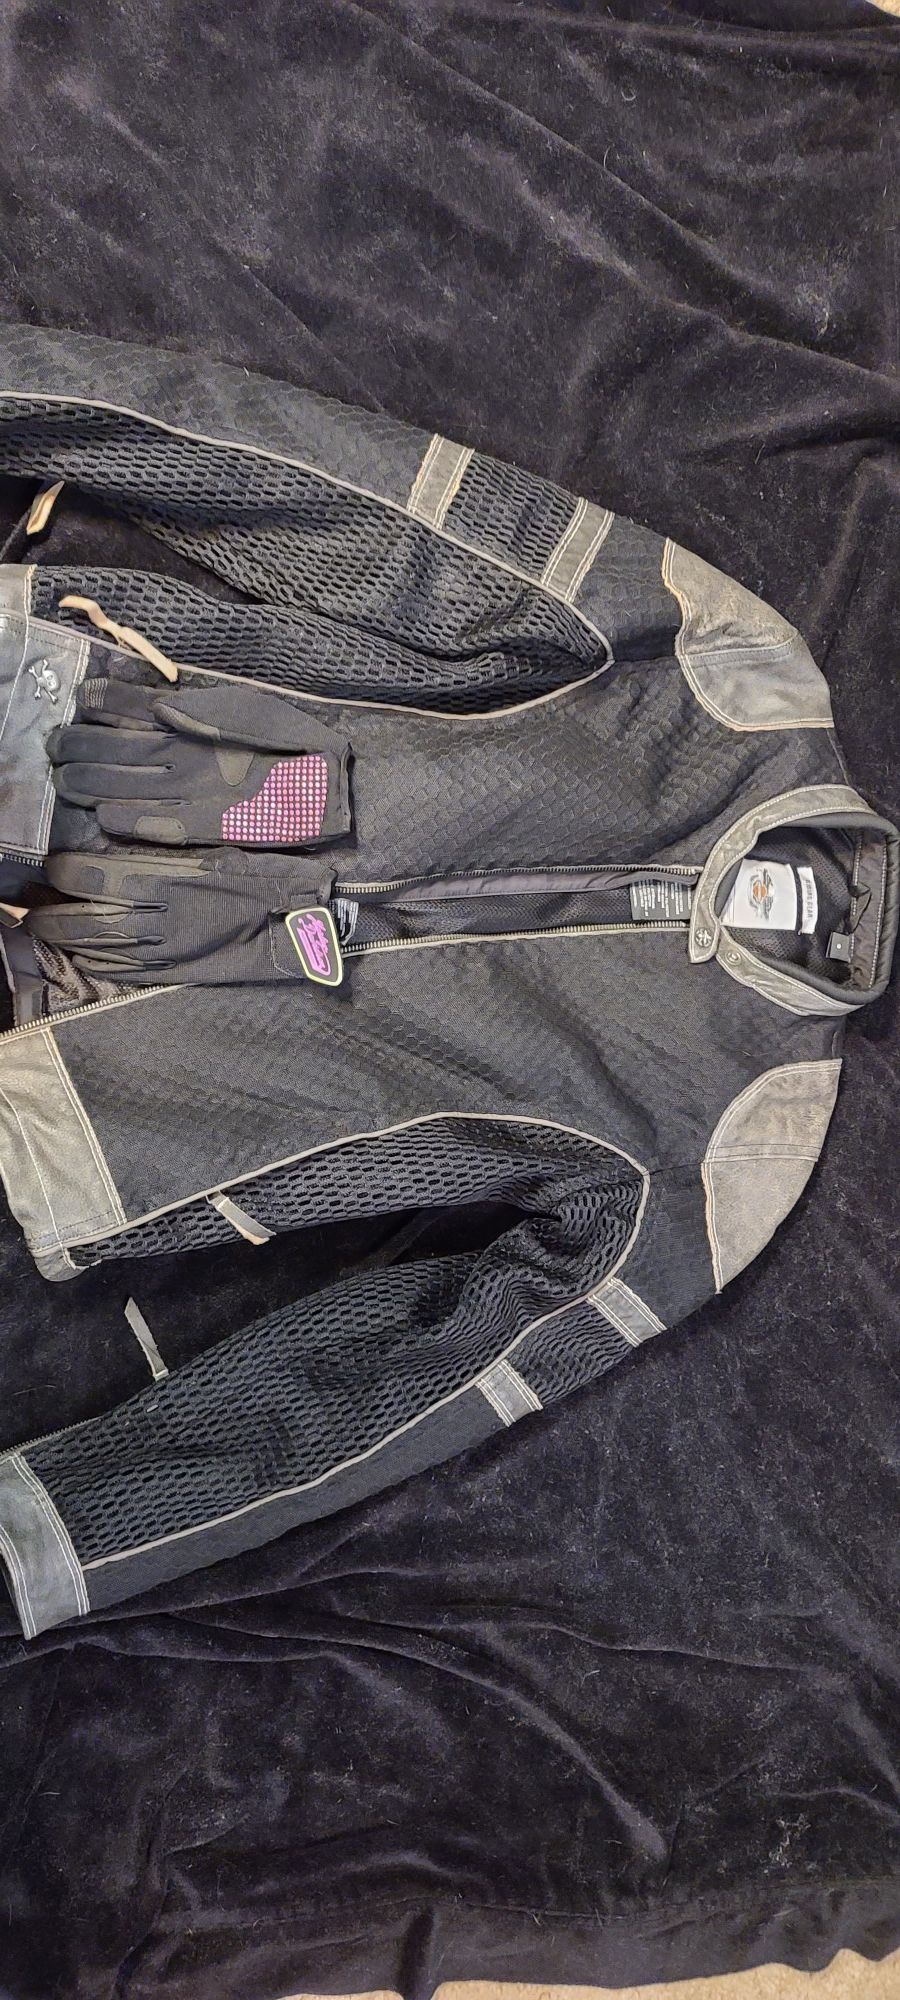 Harley Davidson motorcycle jacket and gloves